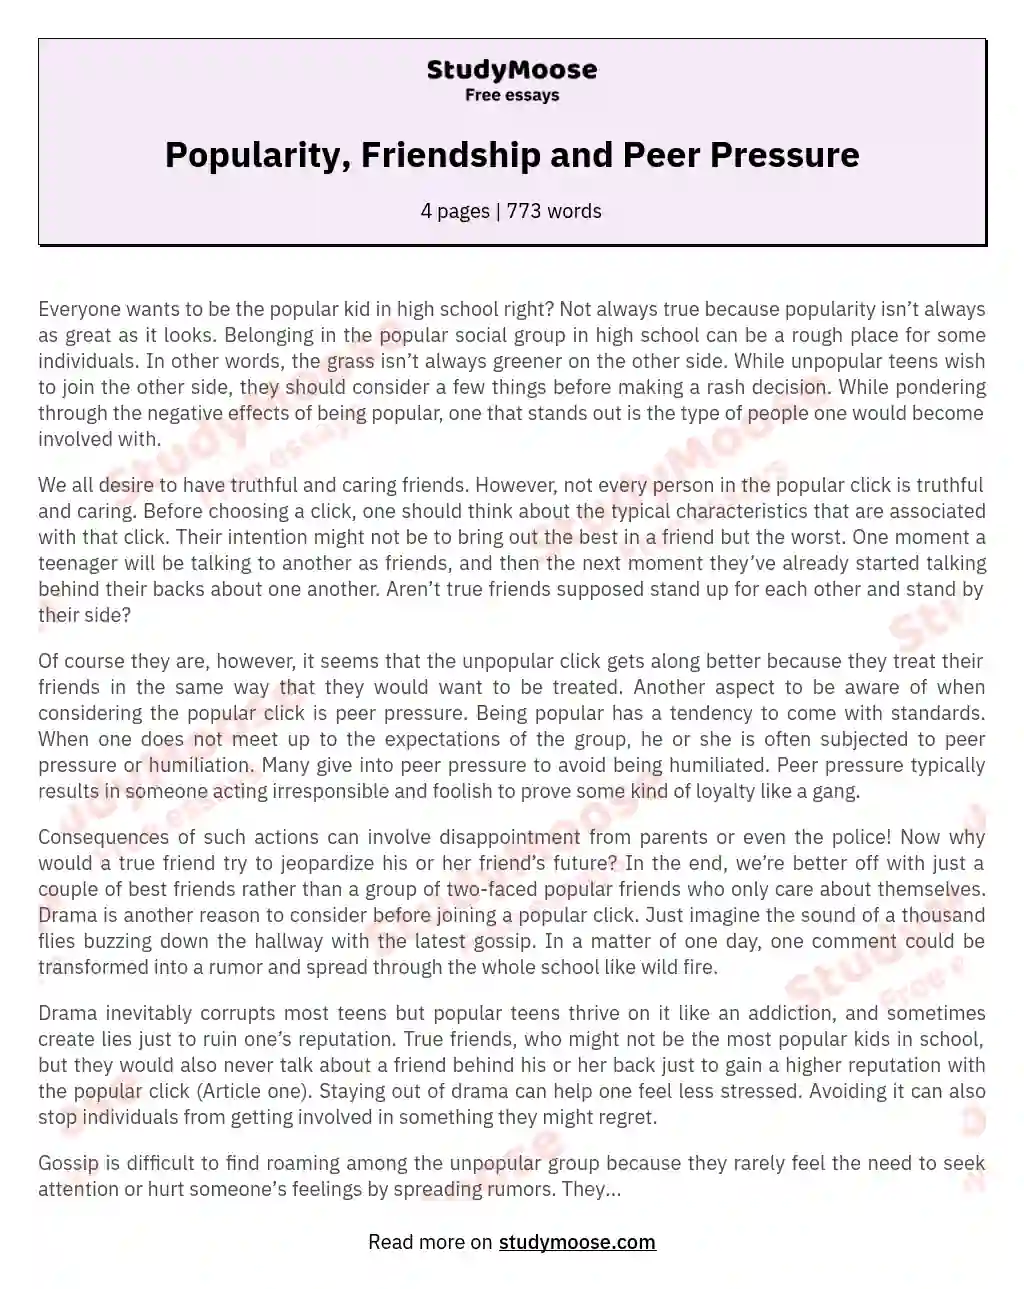 peer pressure definition essay